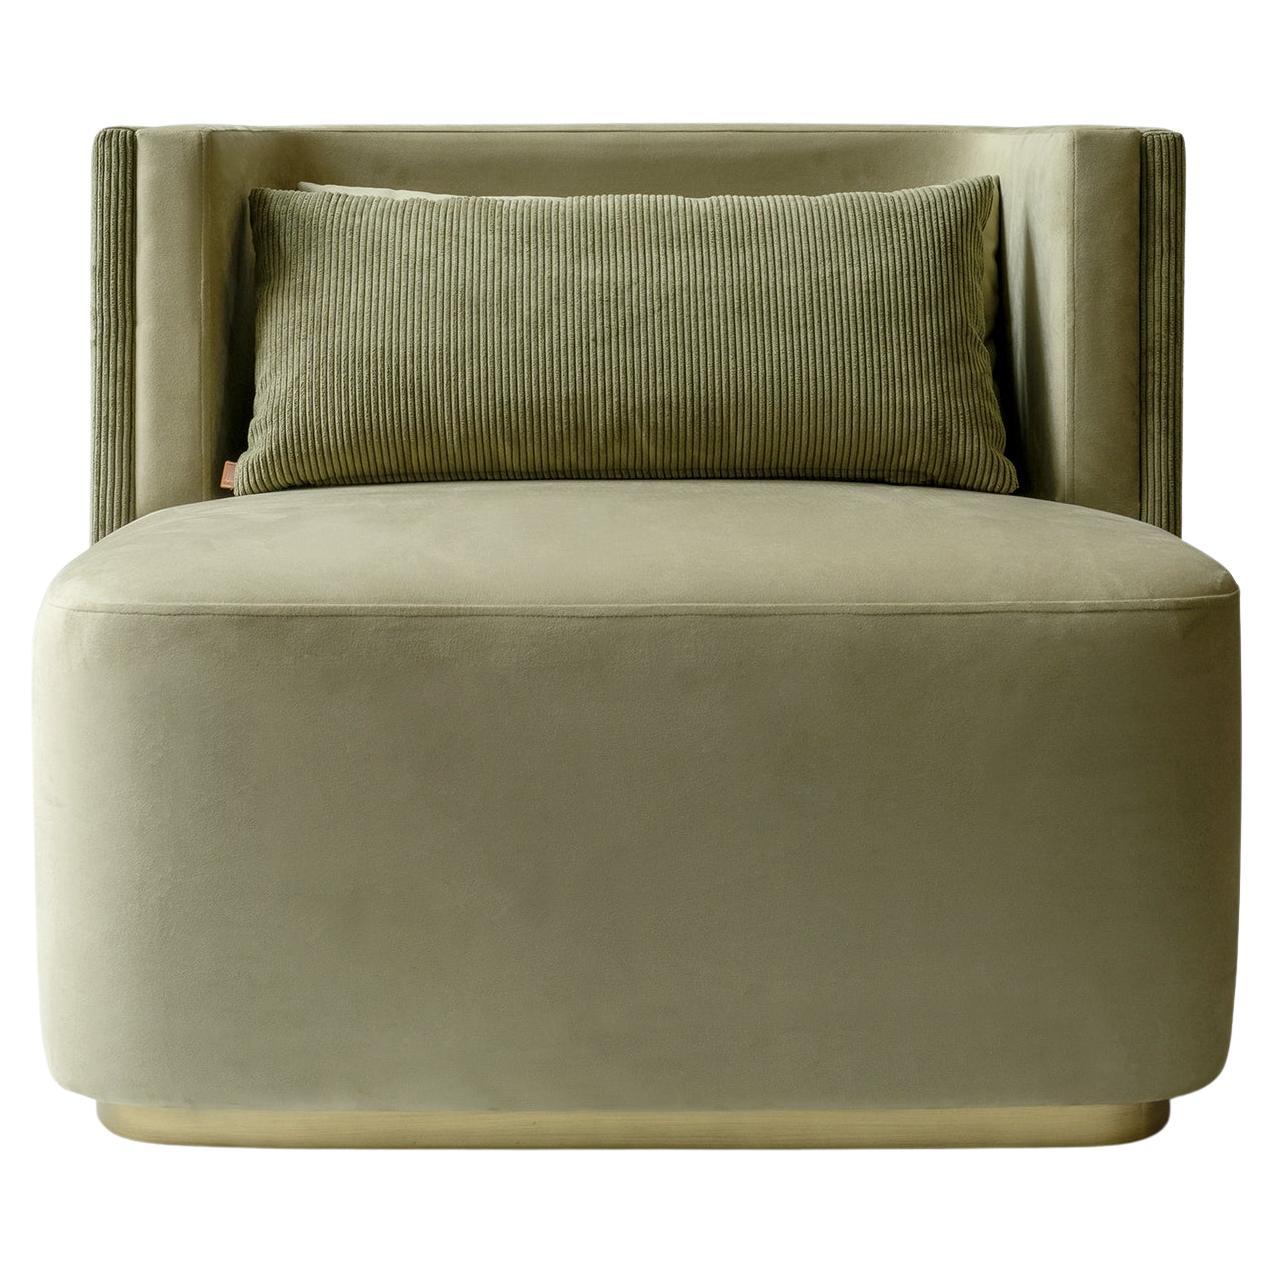 Papillonne Green Corduroy Upholstered Armchair